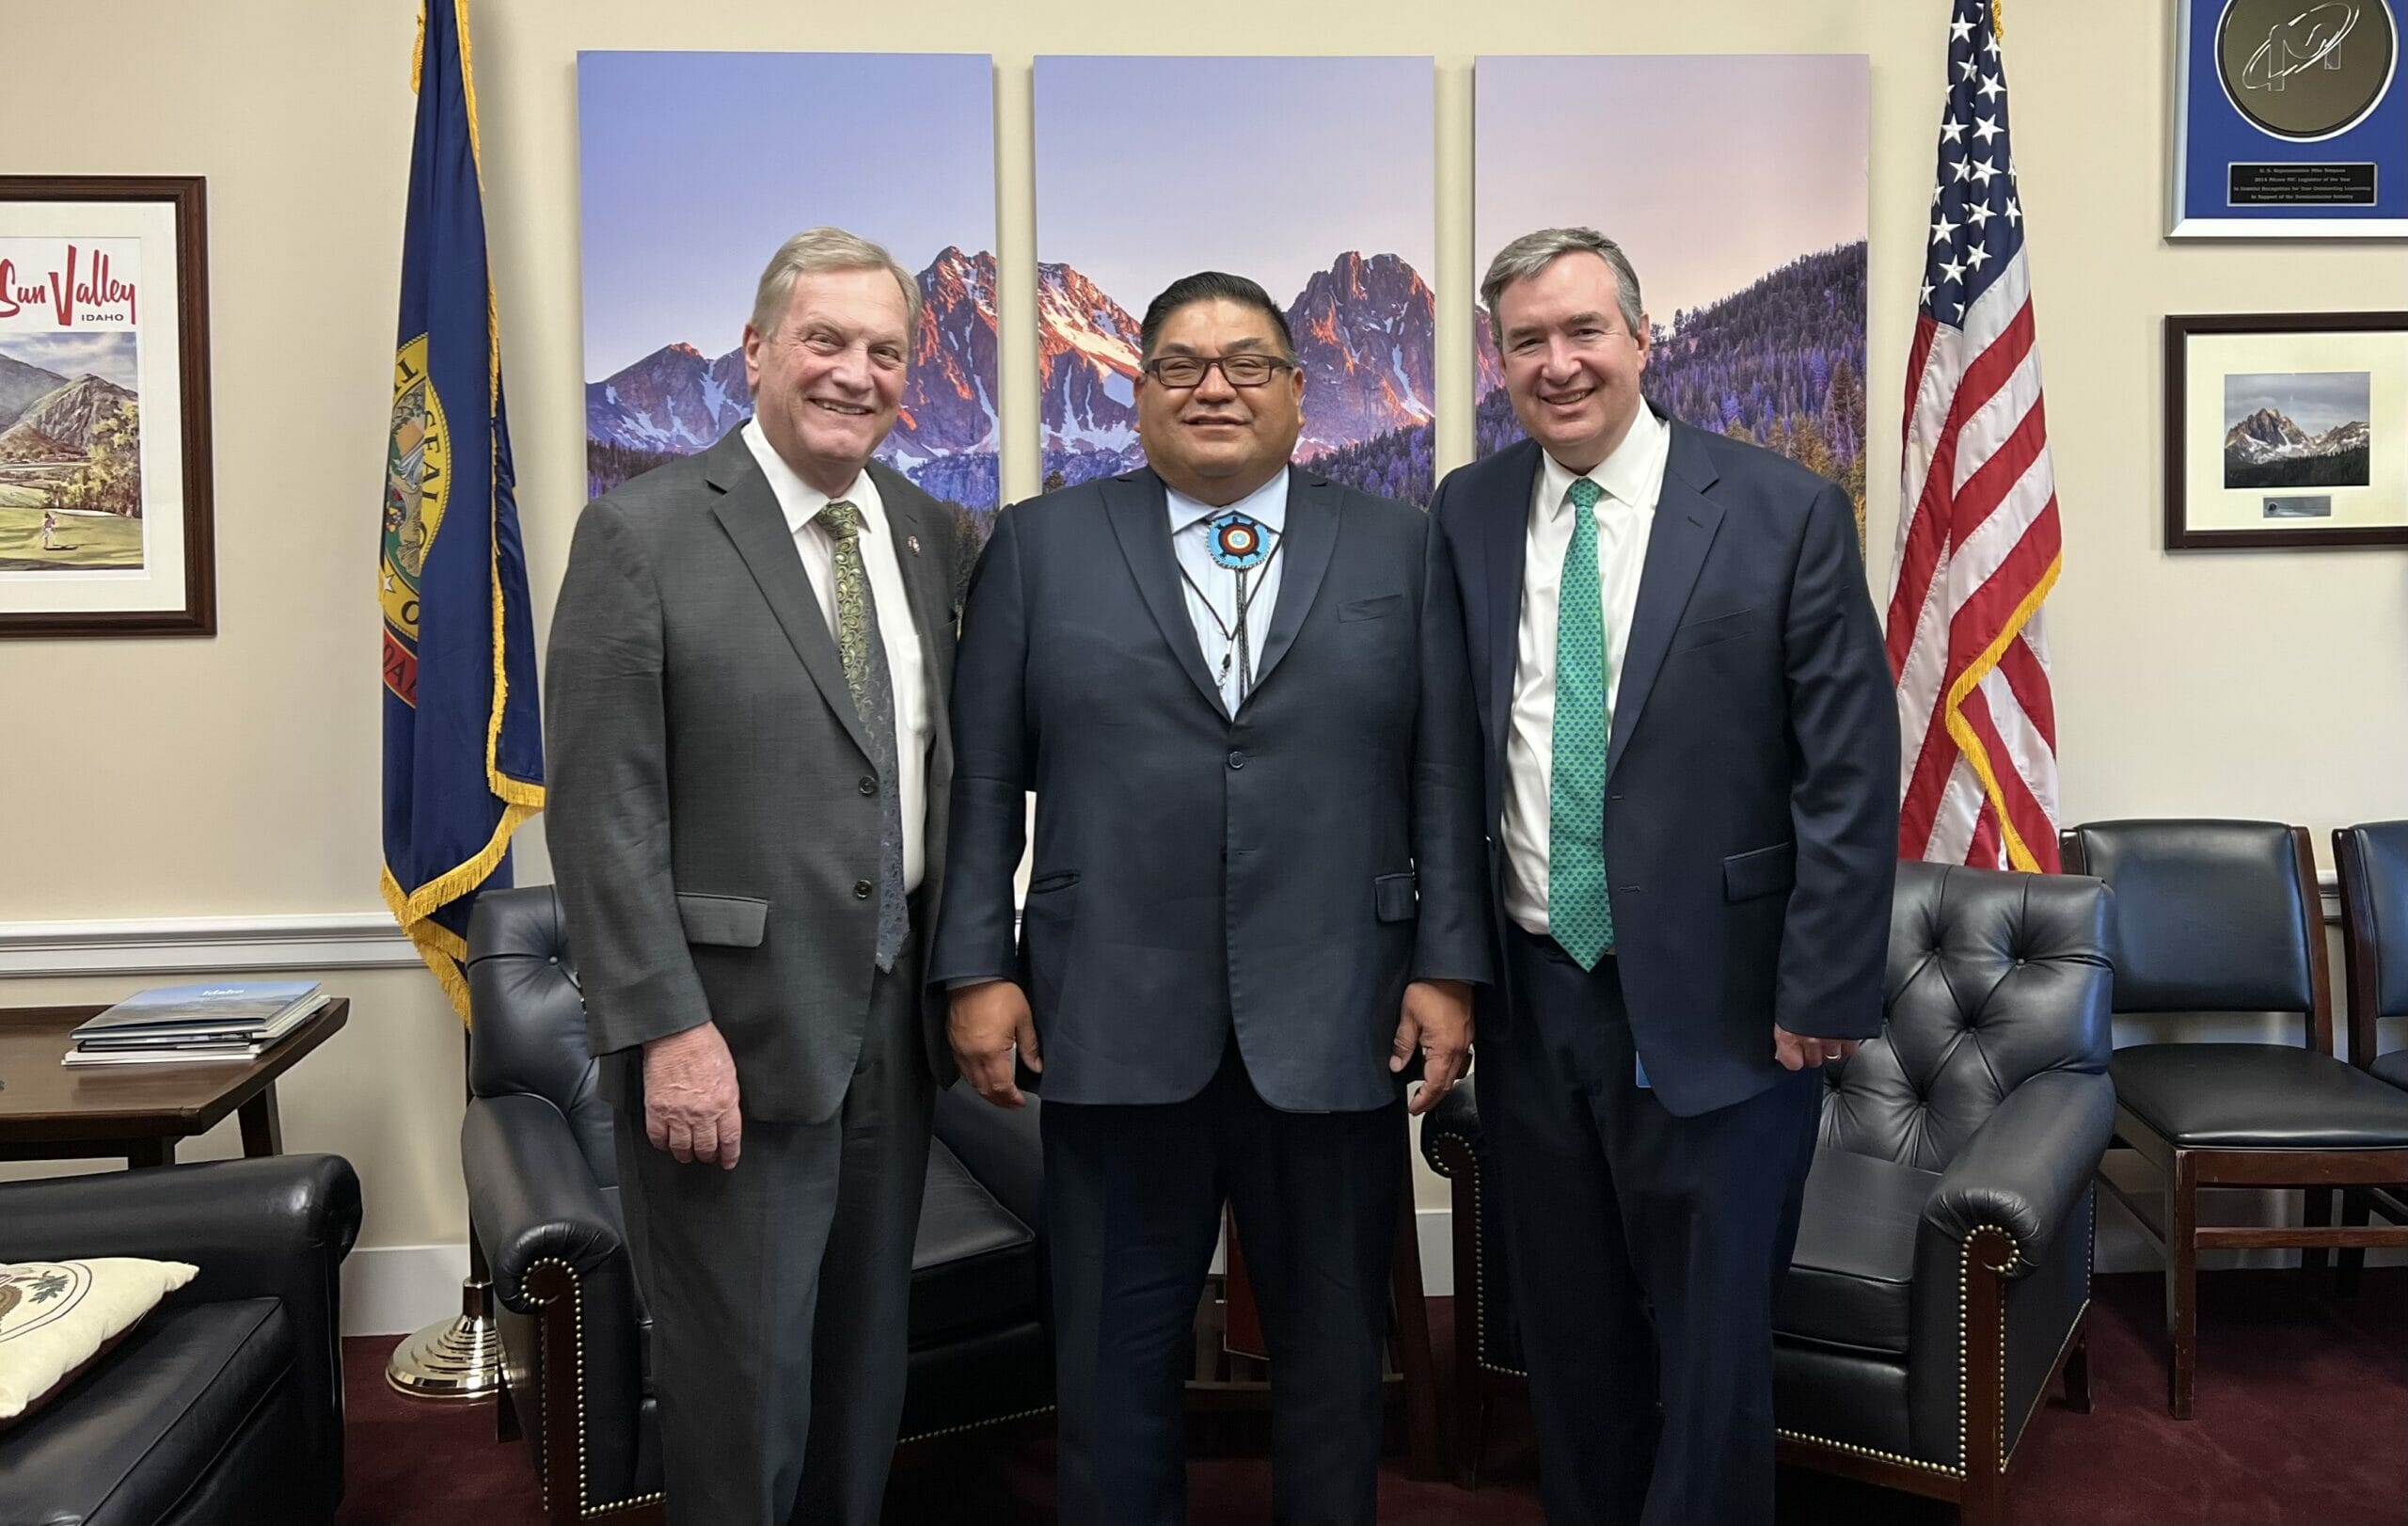 U.S. Rep. Mike Simpson (R-ID), Nez Perce Vice Chairman Shannon Wheeler, and Lindsay Slater.